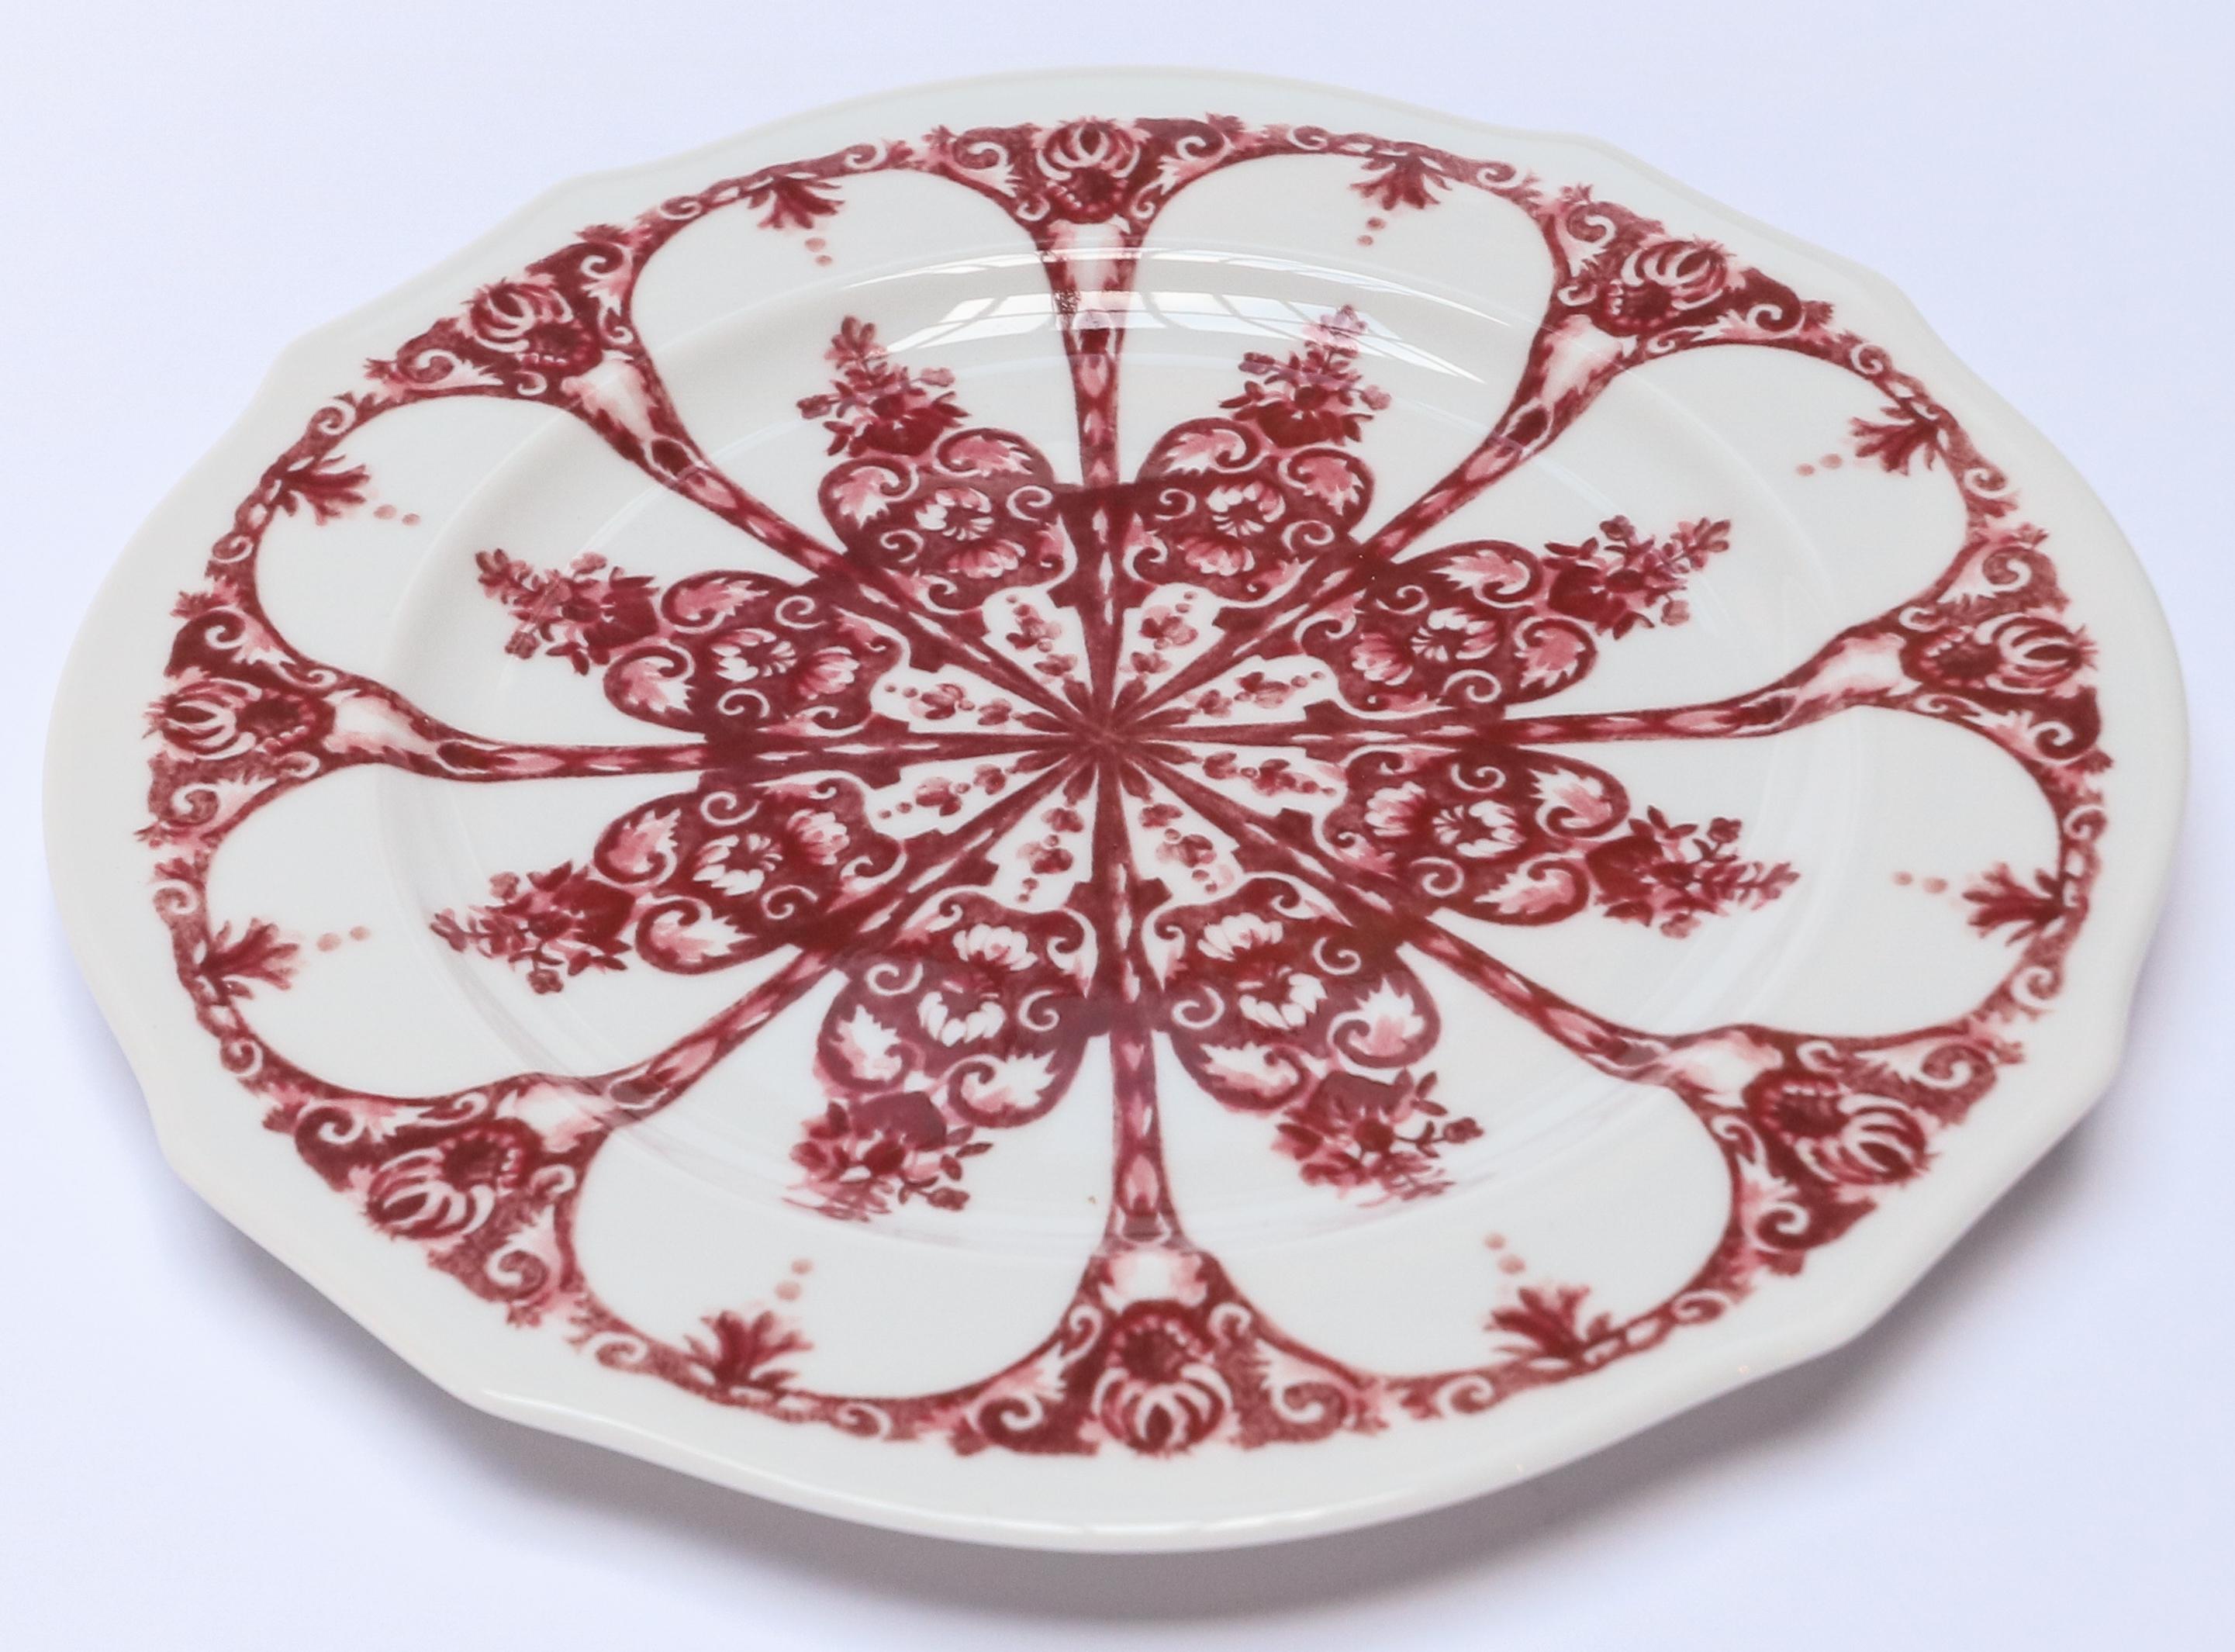 Richard Ginori babele rosso red flat dinner plate in the Duchessa shape 28cm in diameter.
   